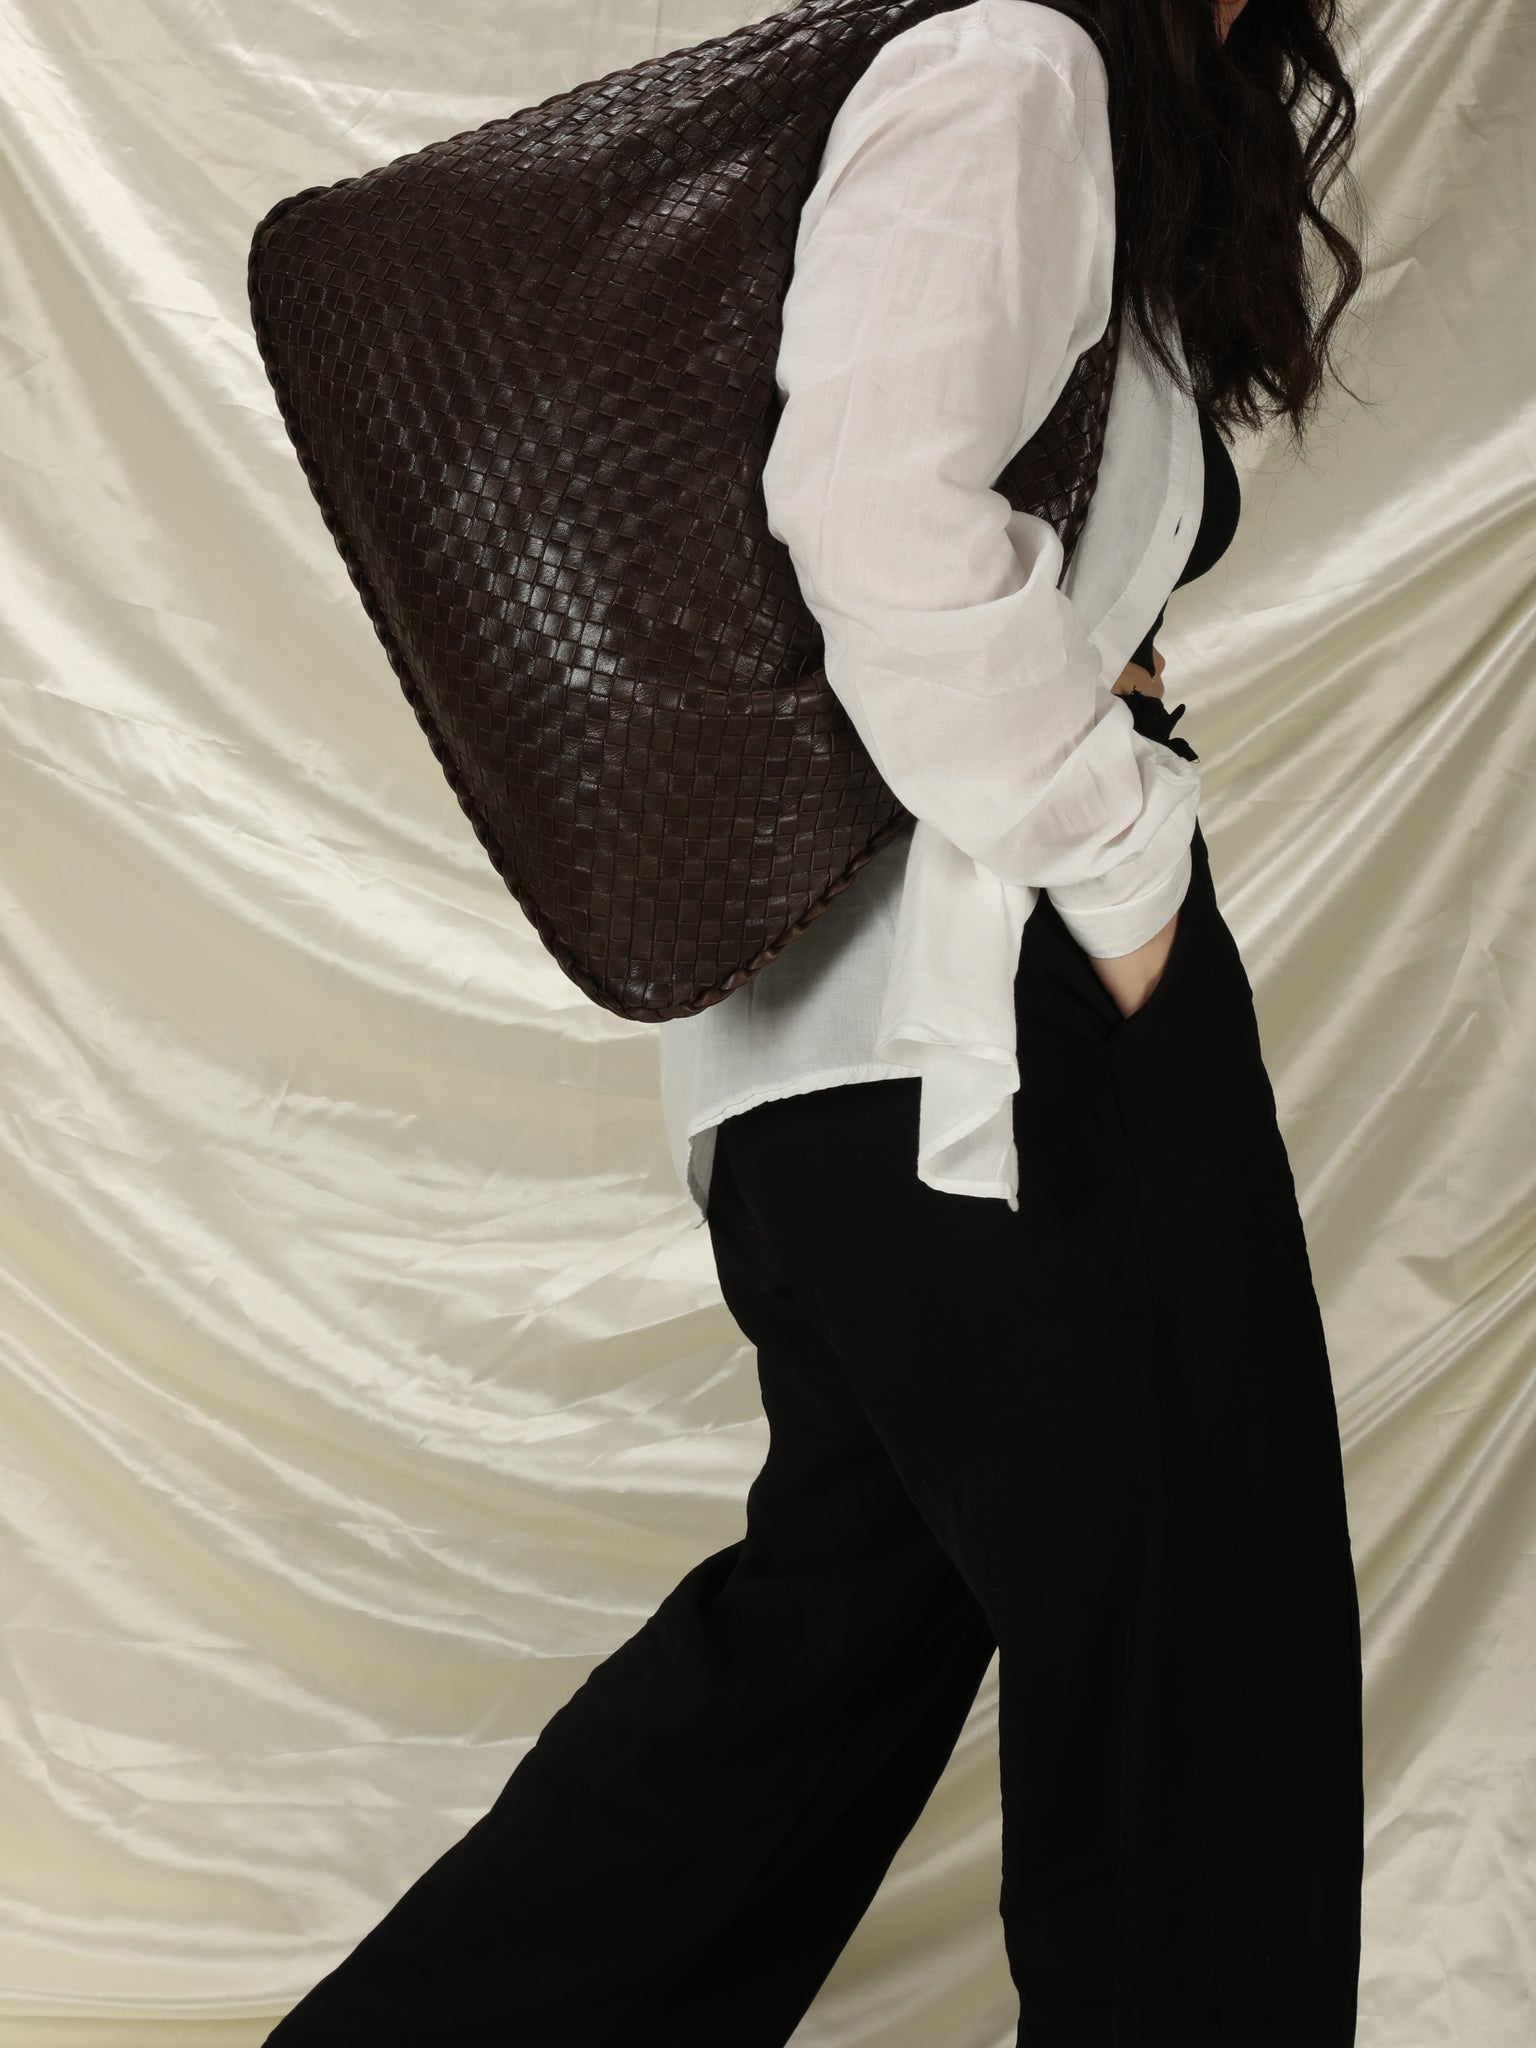 Bottega Veneta Hobo Shoulder Bag – SFN